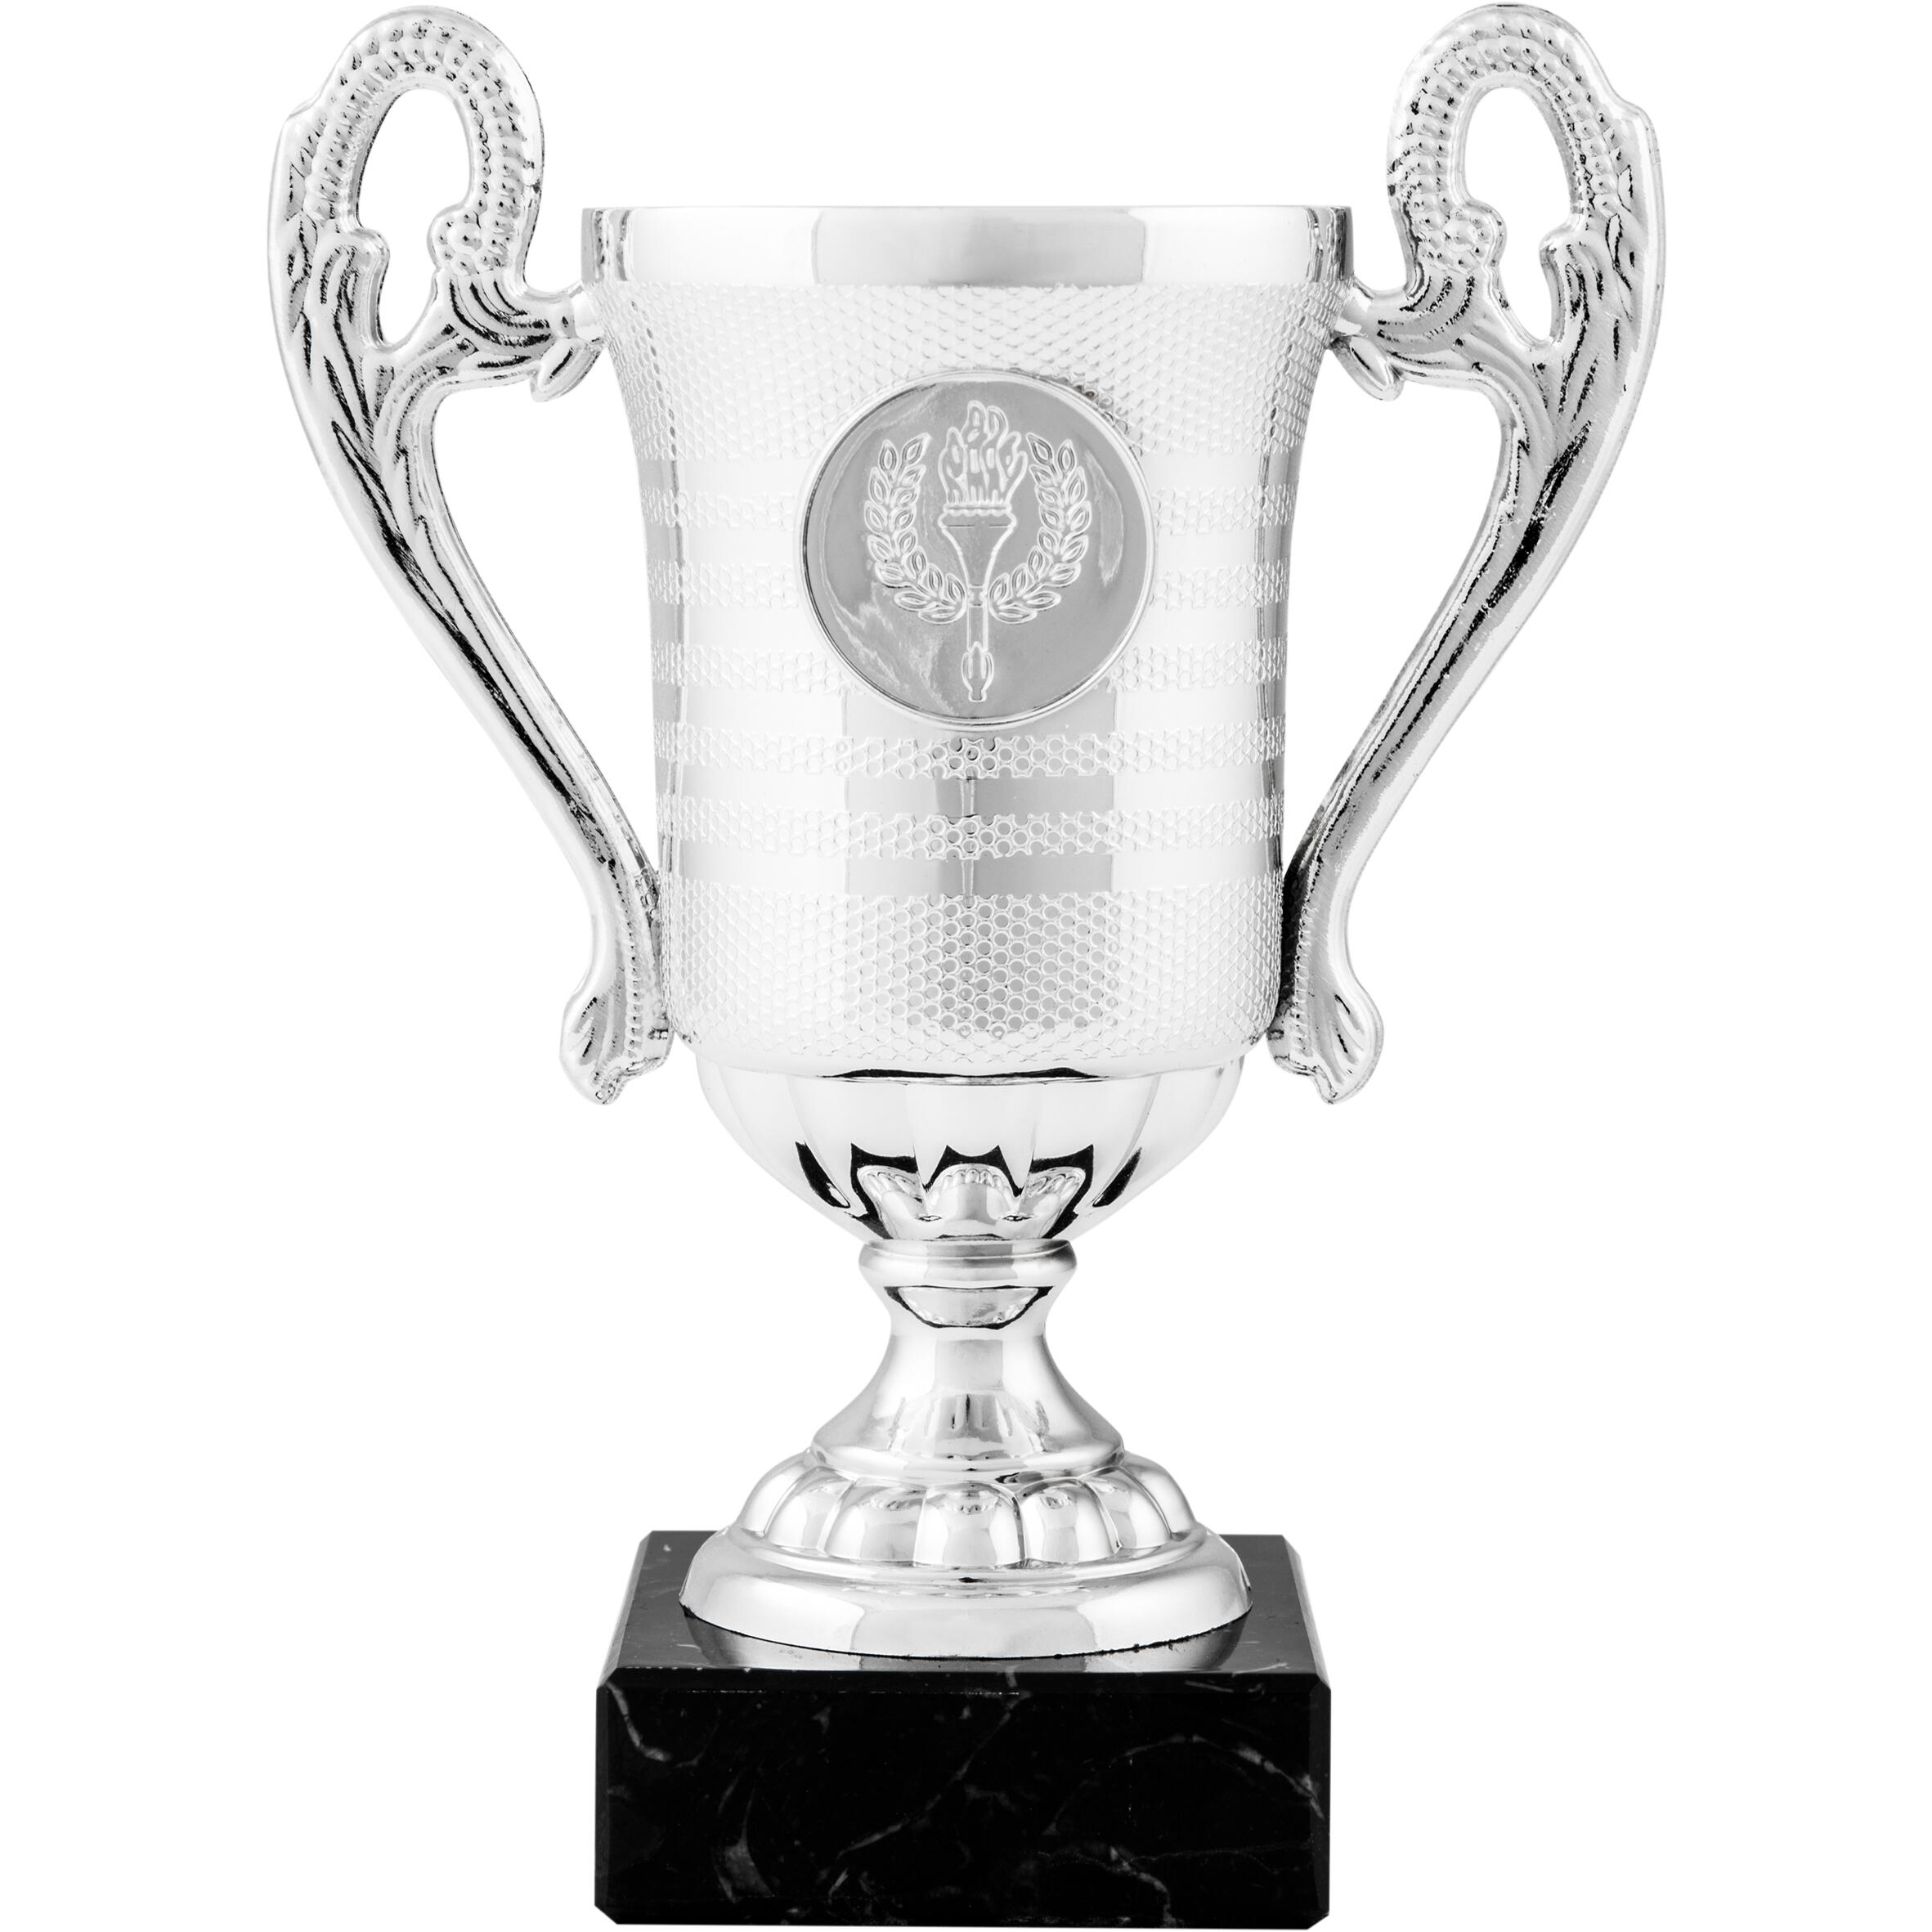 BIEMANS C122 Cup 15cm - Silver